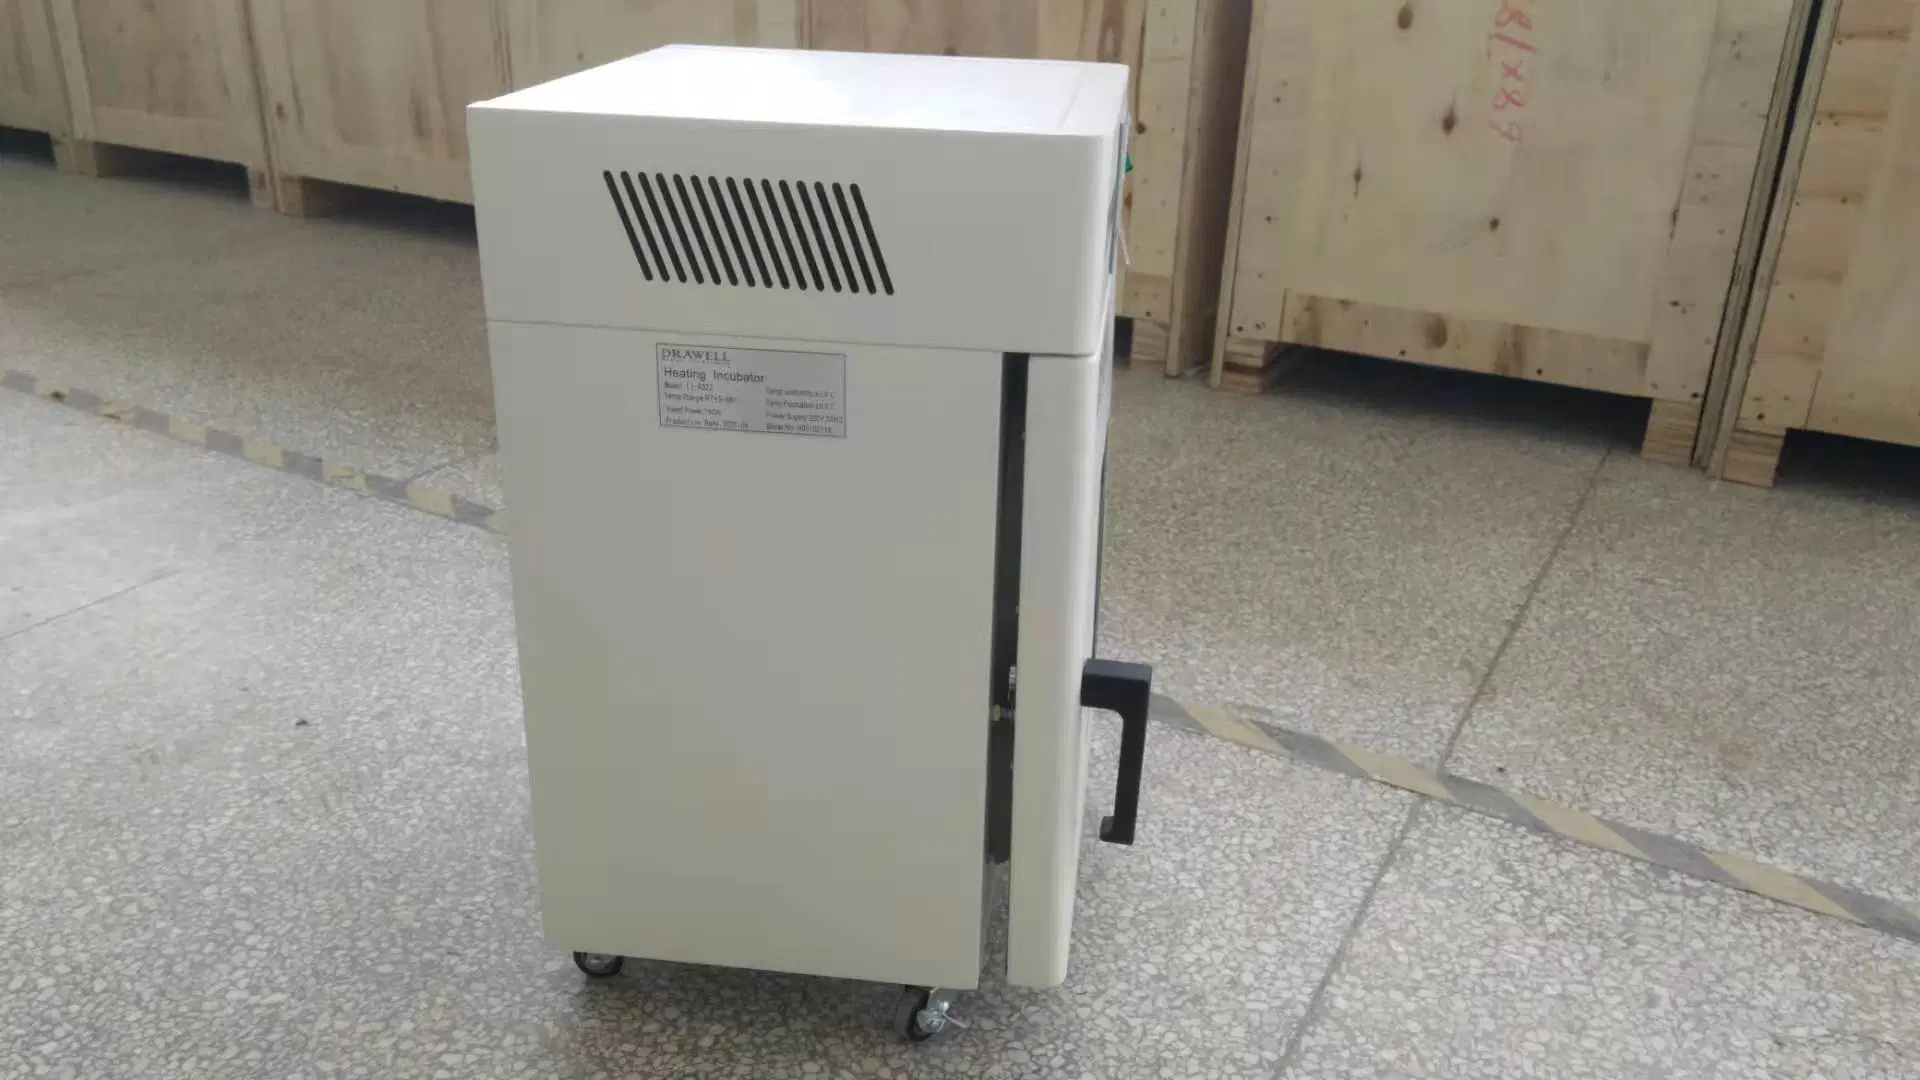 LCD Screen Display Laboratory Biochemical Incubator Heating Incubator